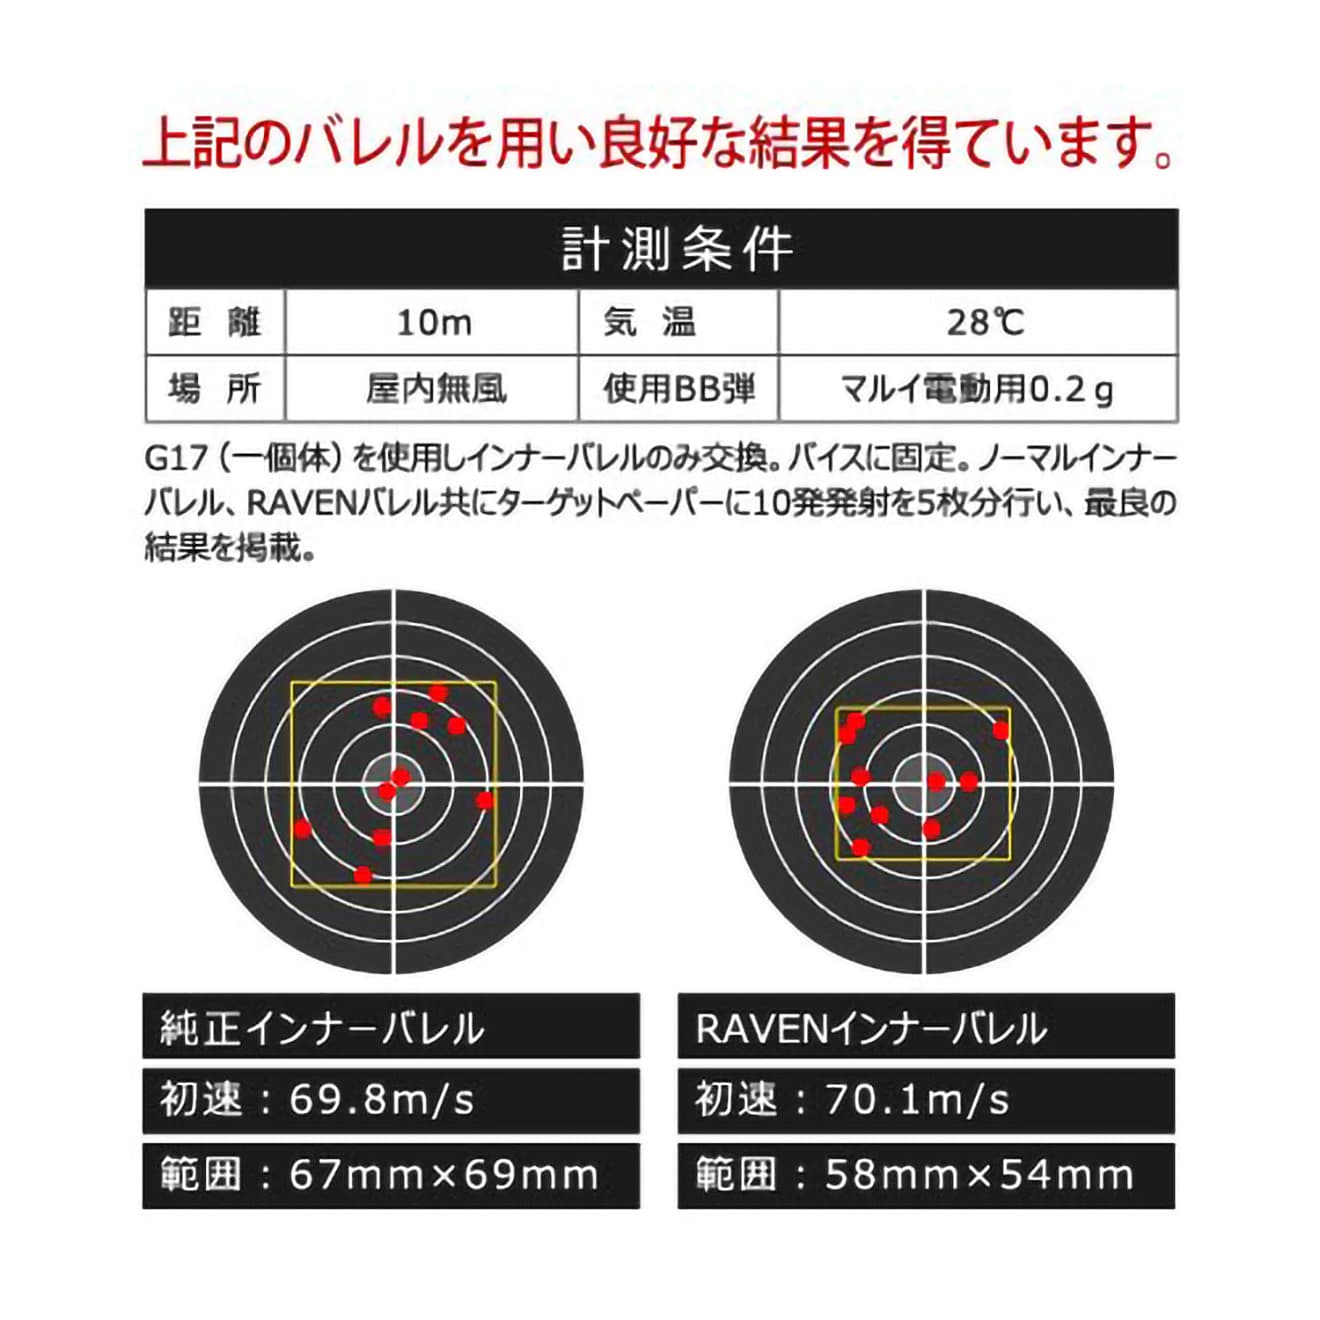 PDI RAVENシリーズ 01+ M40A5専用 精密インナーバレル(6.01±0.007)